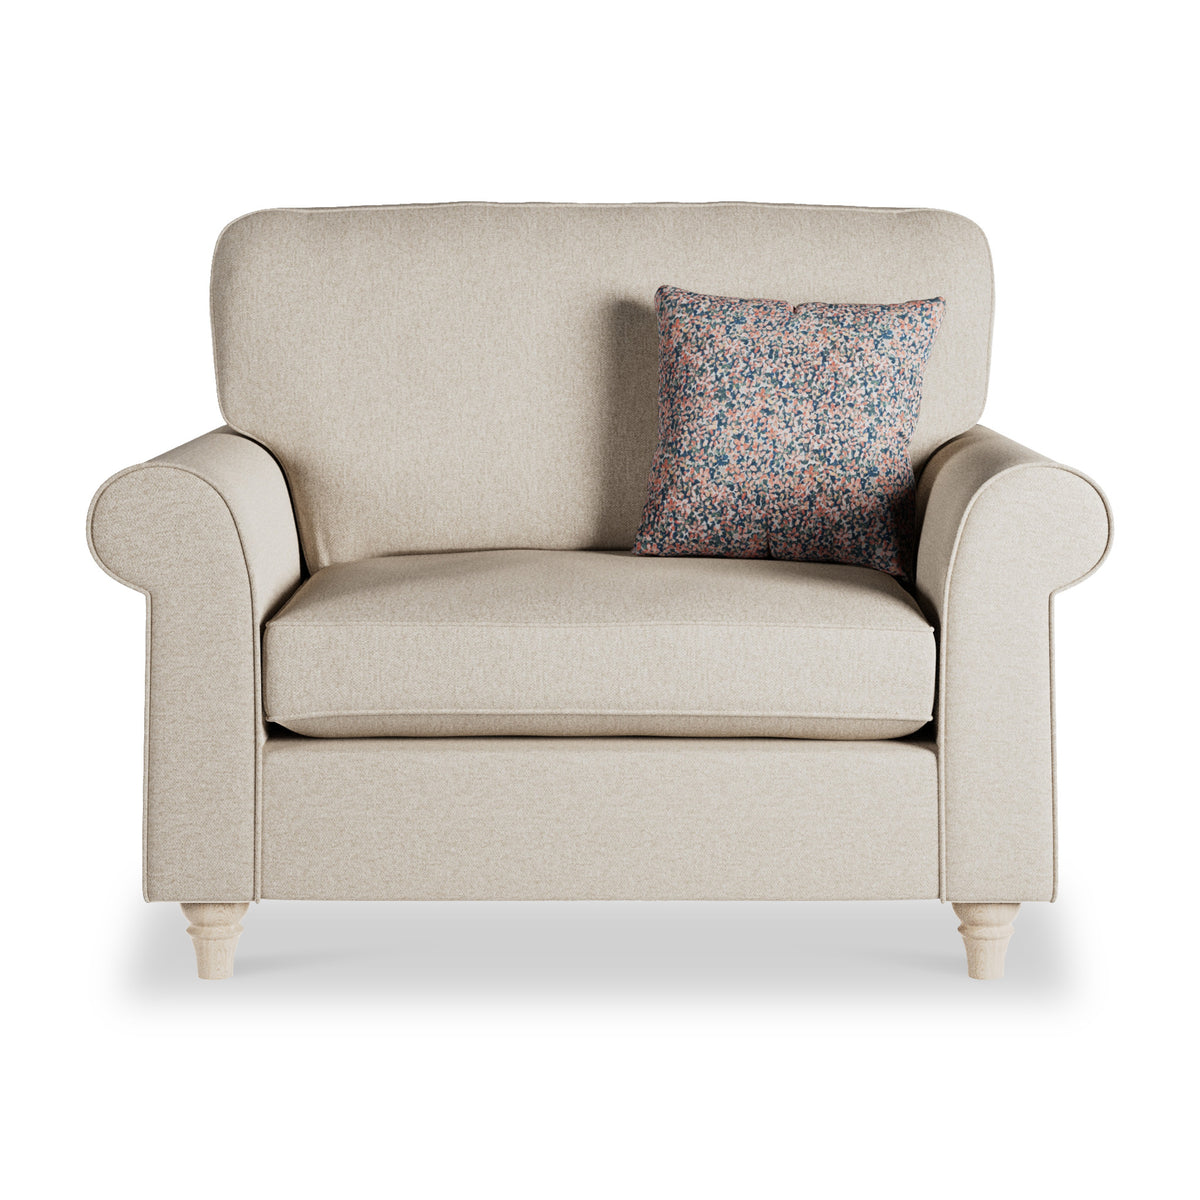 Thomas Sandstone Snuggle Living room Chair